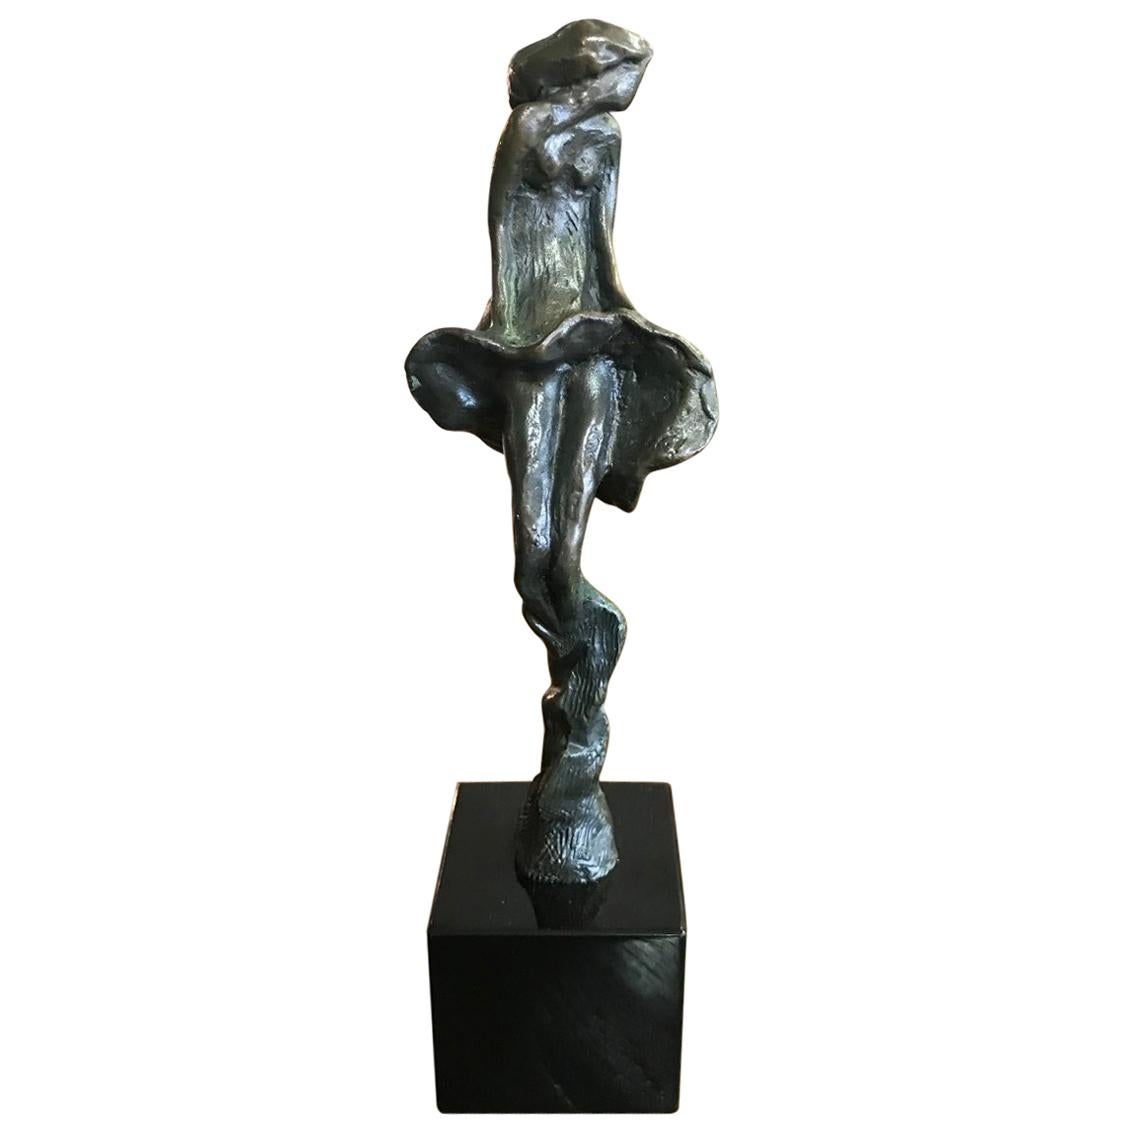 Tom Corbin Signed Bronze Sculpture/ Statuette "Dancer"